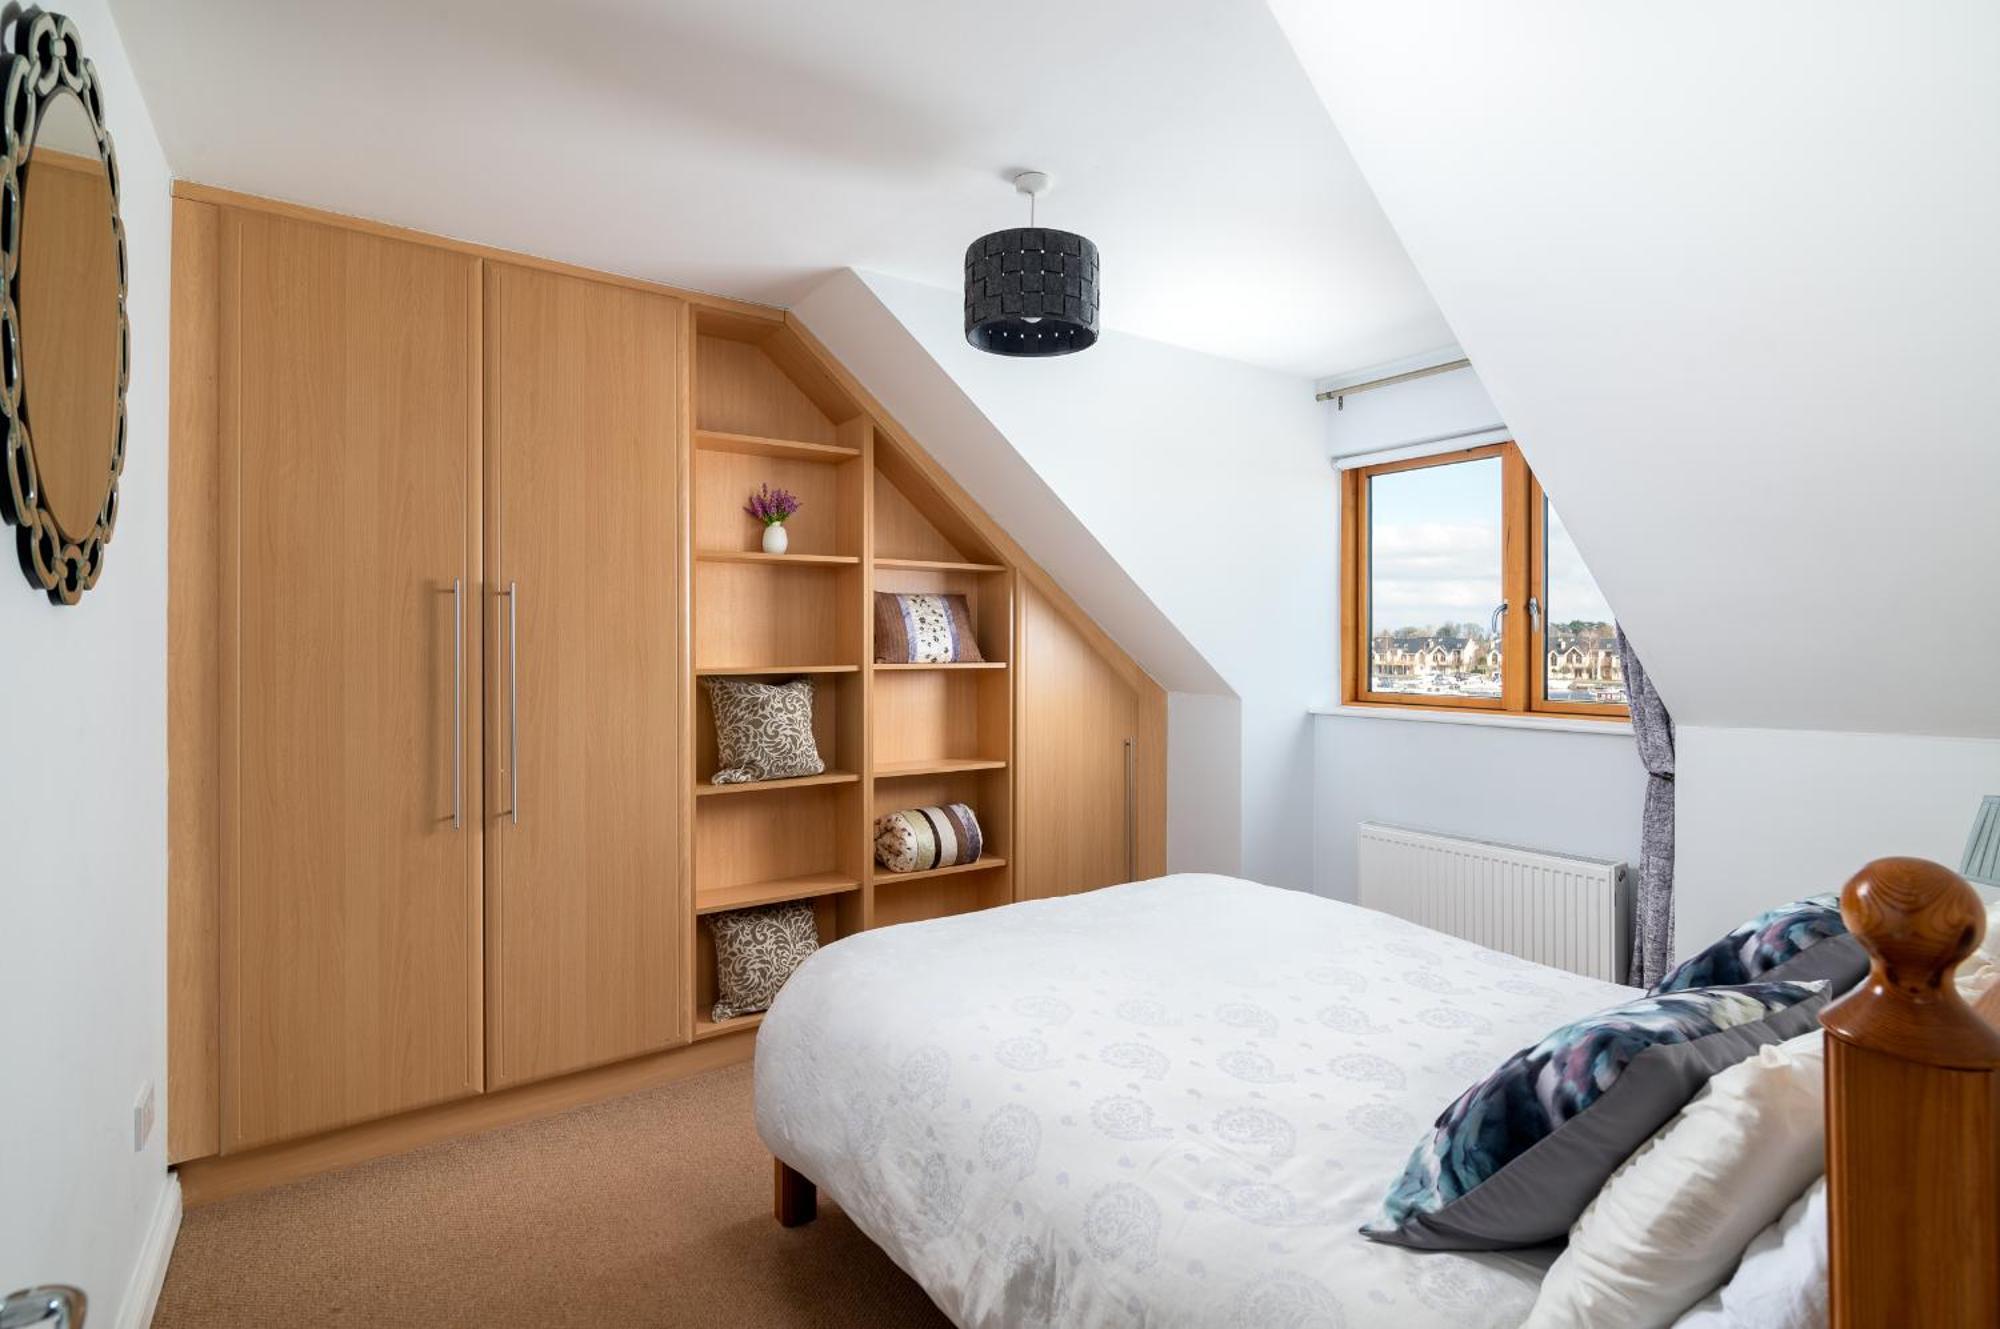 Shannonside - Stylish 5 Bed Marina Home & 40Ft Mooring Termonbarry Экстерьер фото